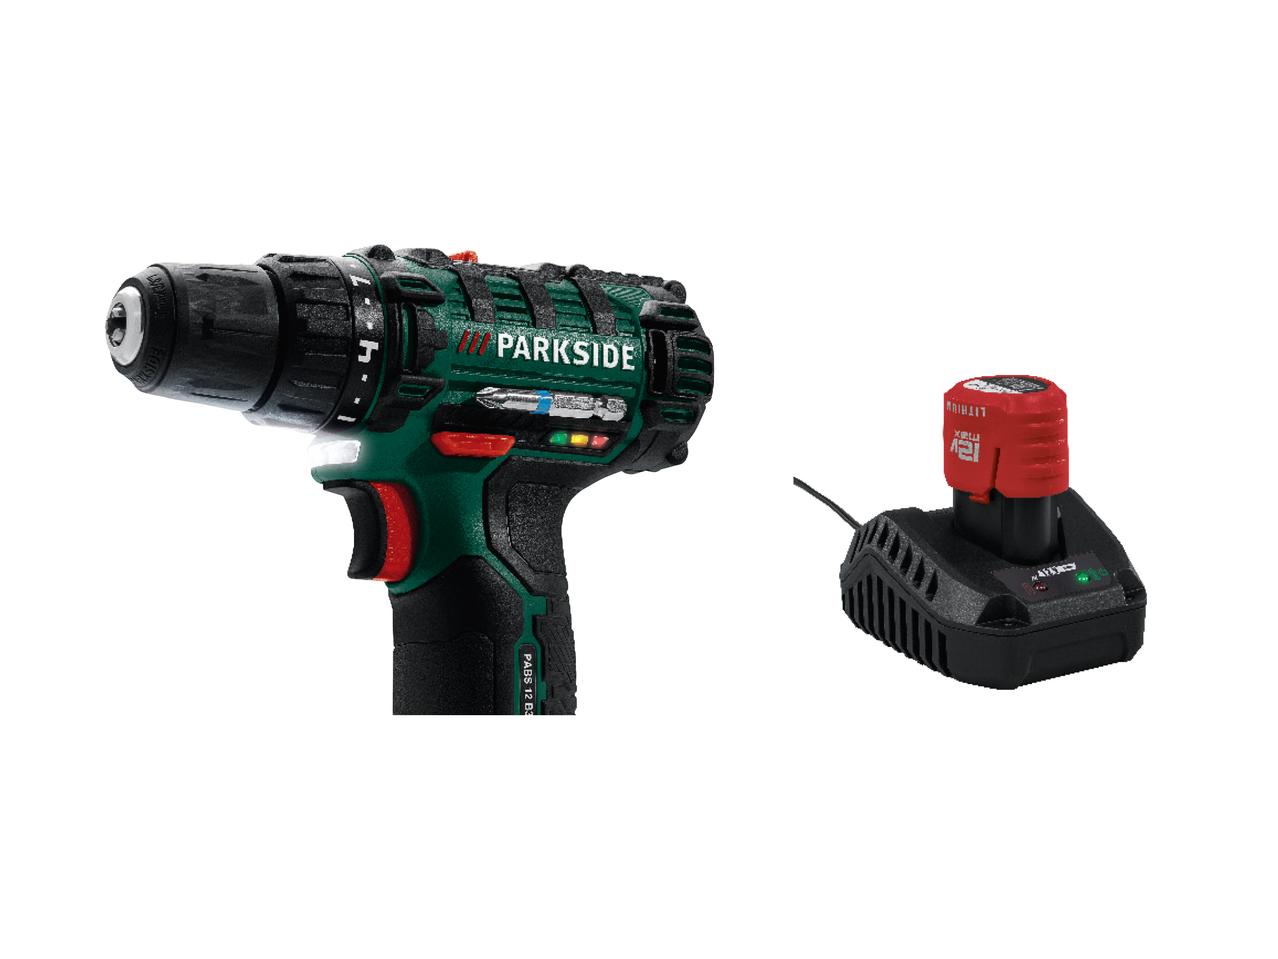 PARKSIDE 12V Cordless Drill